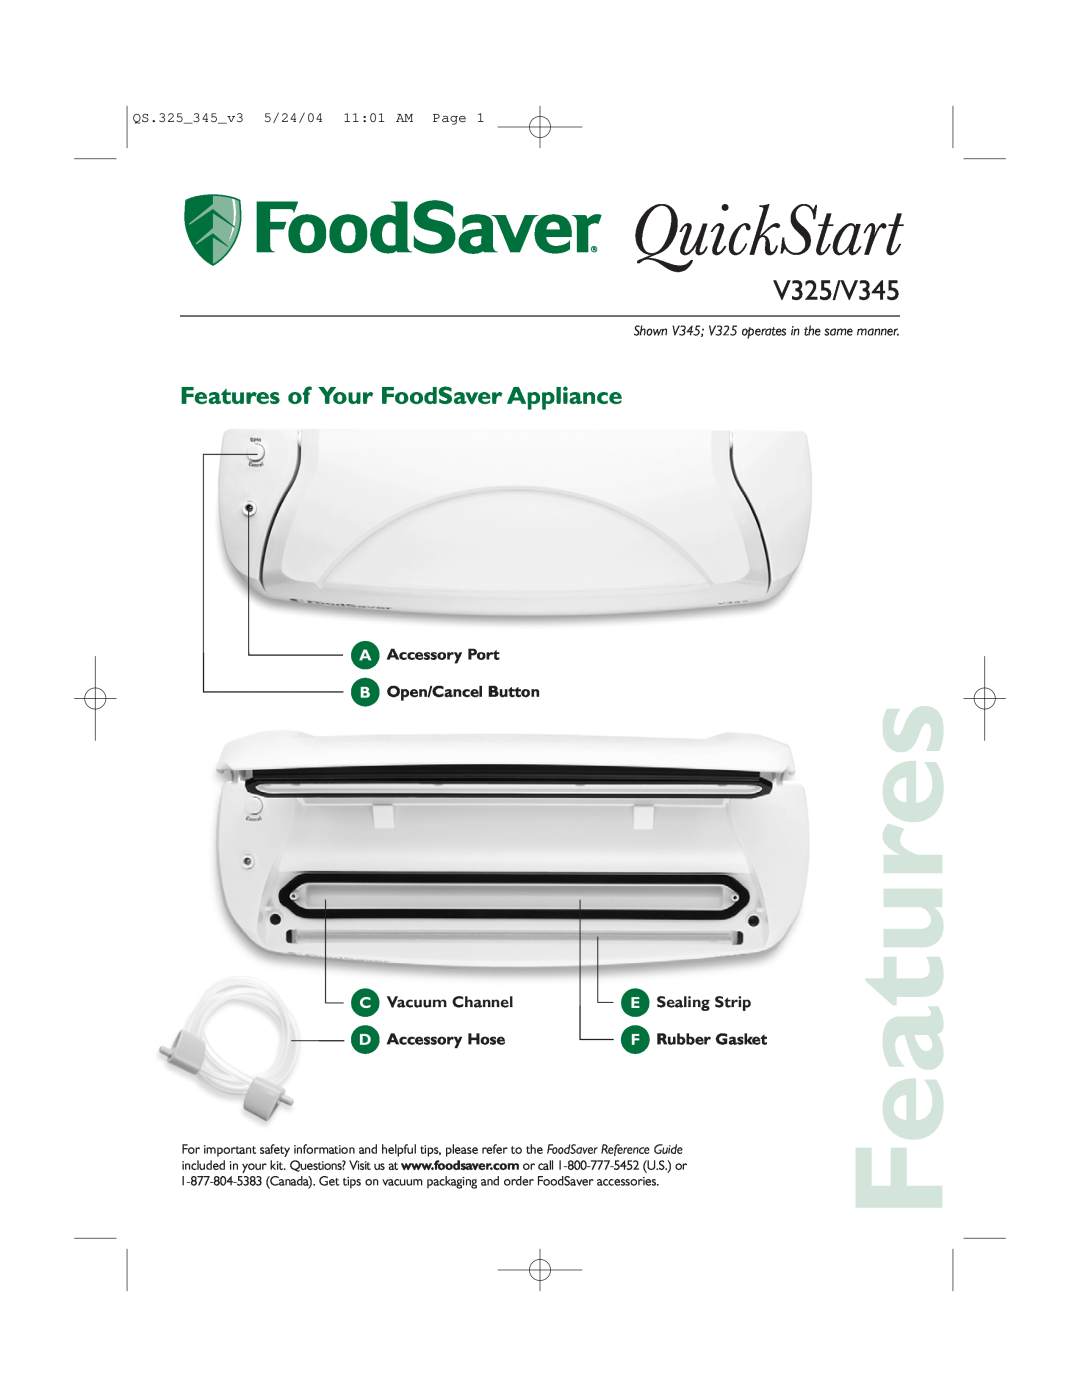 FoodSaver quick start Features of Your FoodSaver Appliance, QuickStart, V325/V345, Vacuum Channel, Sealing Strip 